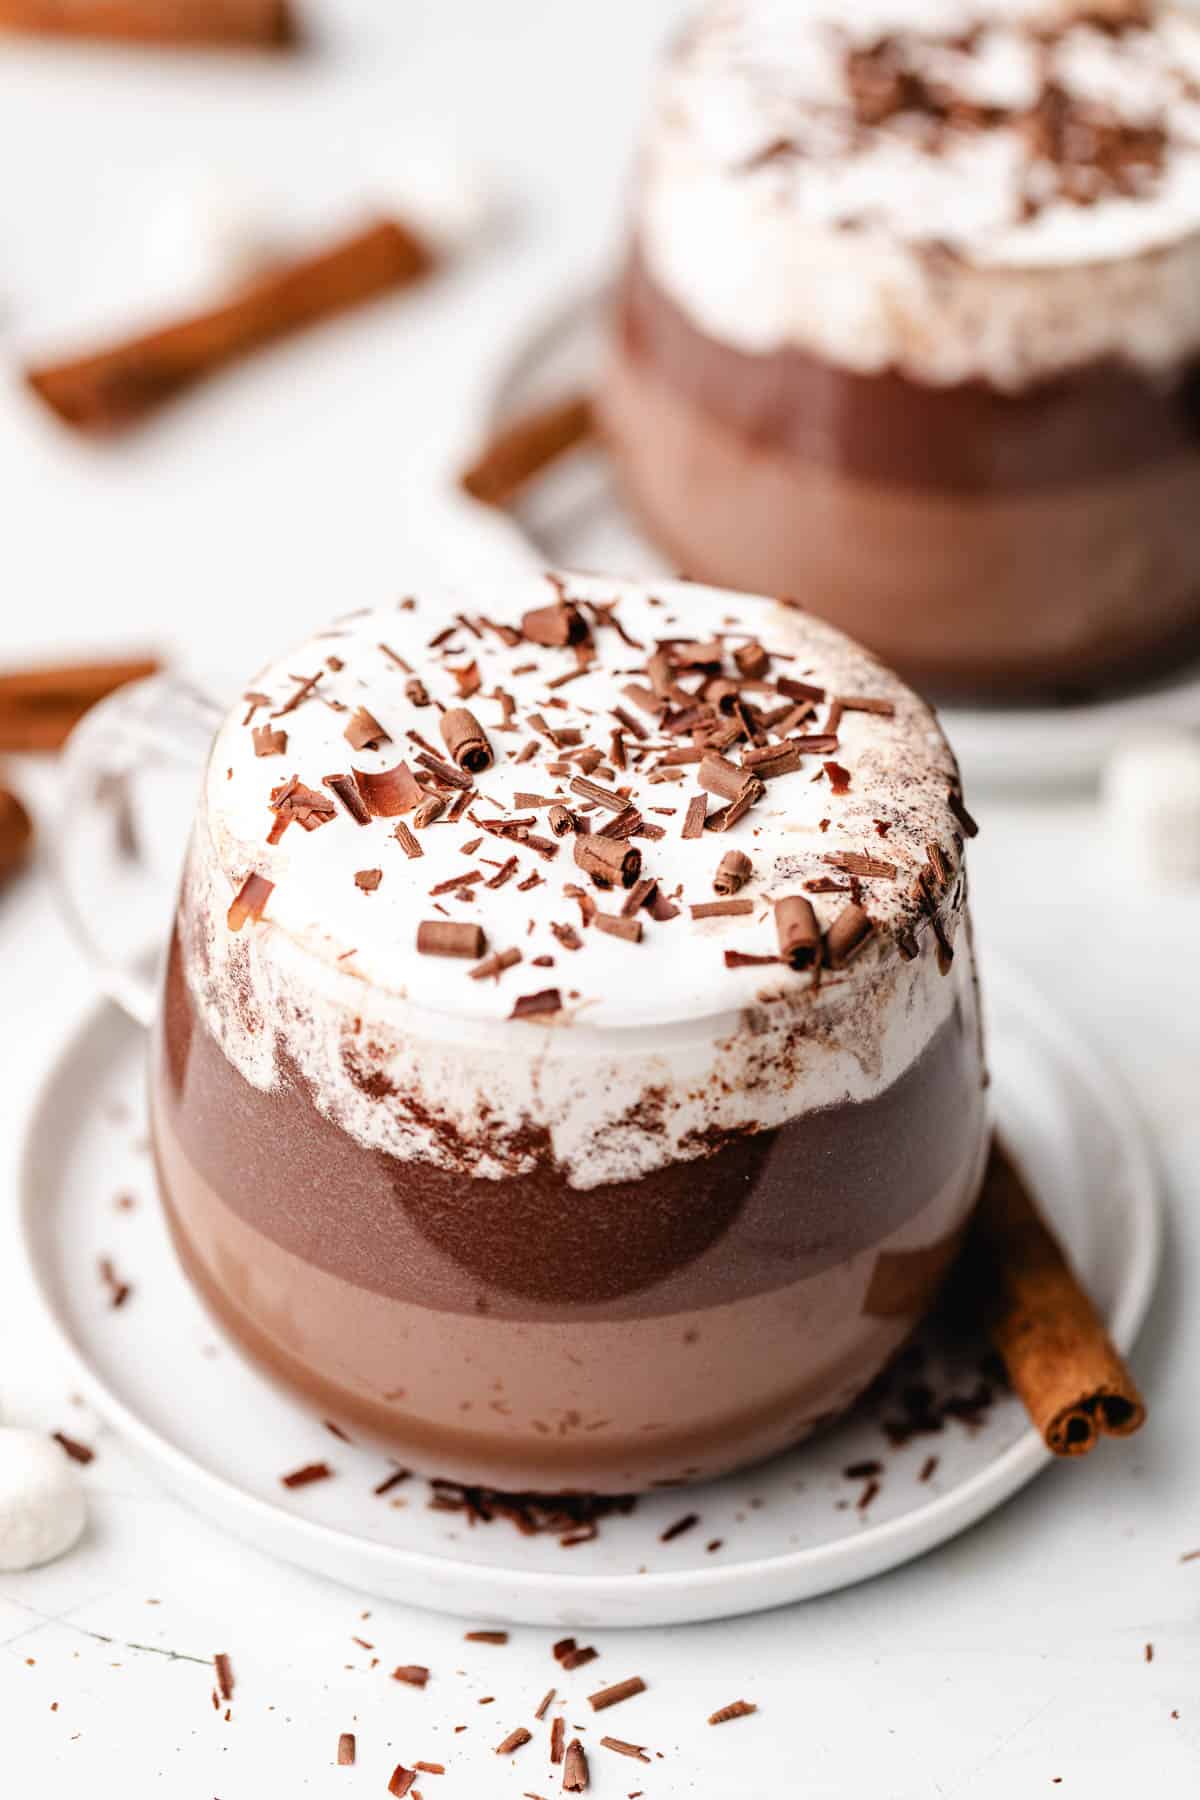 Chocolate shavings on top of a mug of hot chocolate.